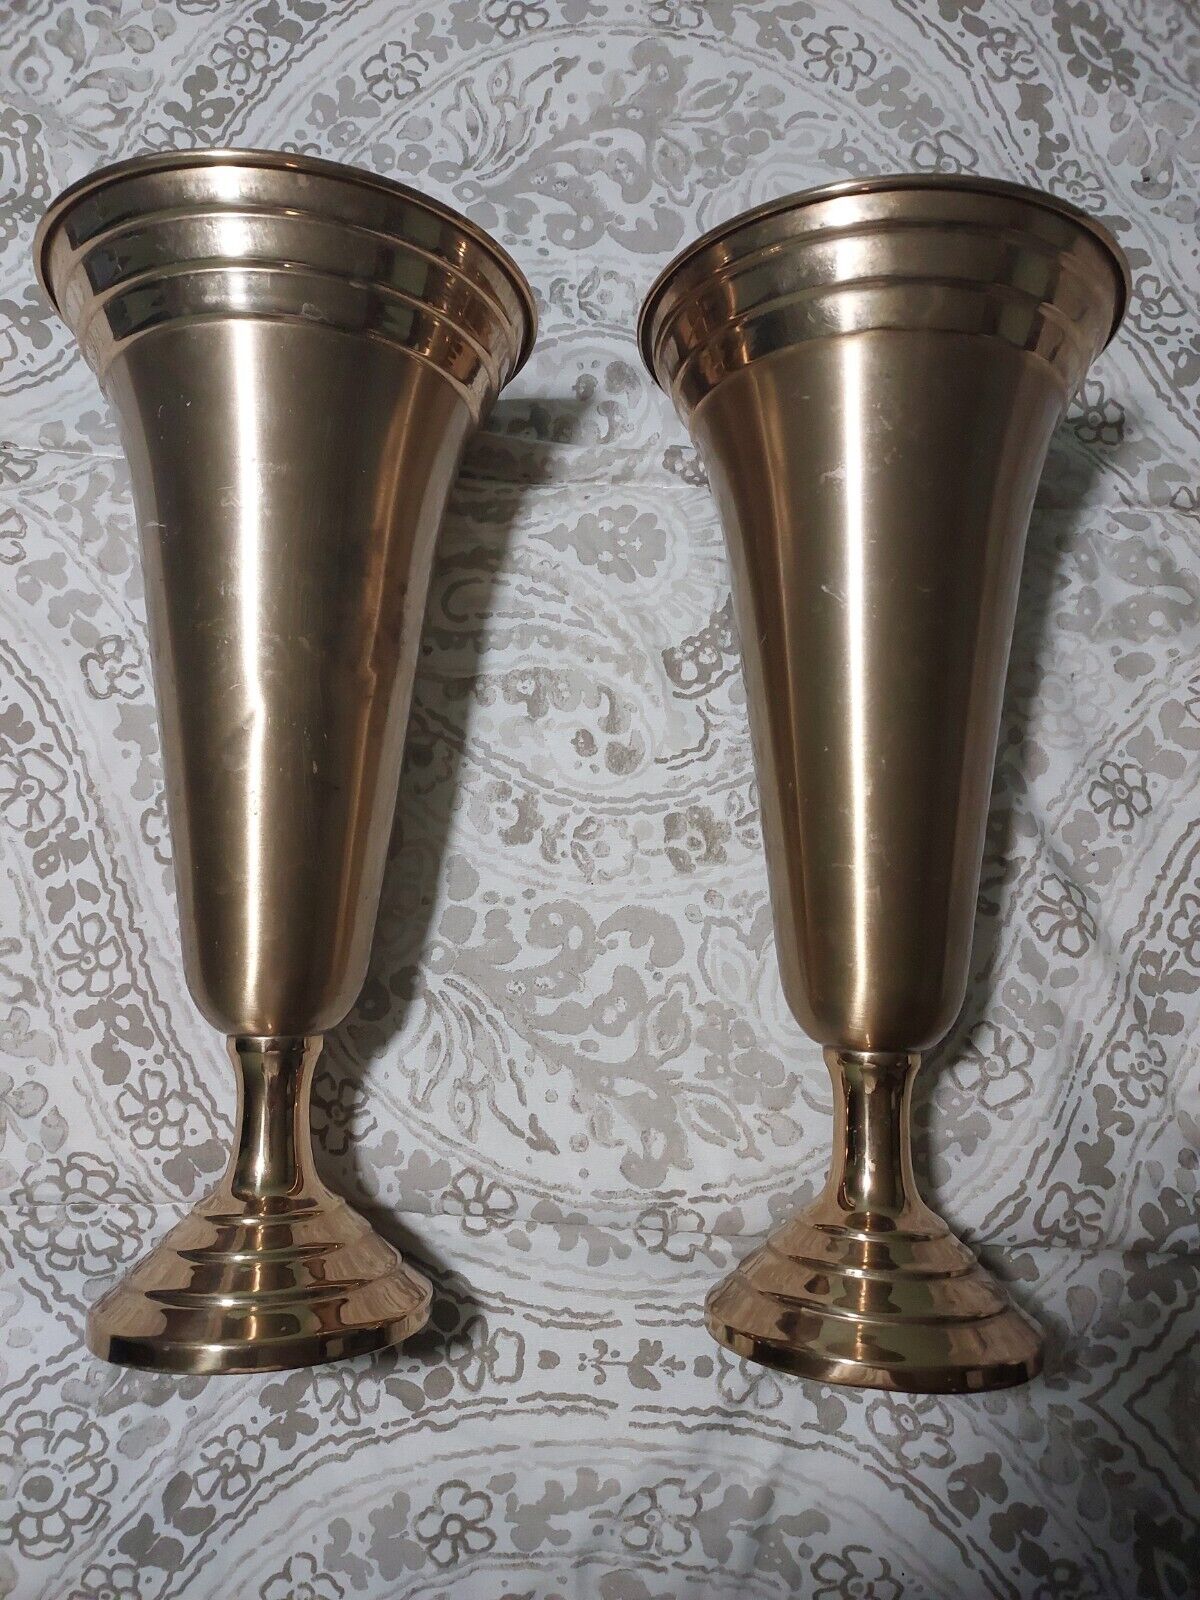 Pair of Metal Altar Vases (appx. 13.75 X 6.75)